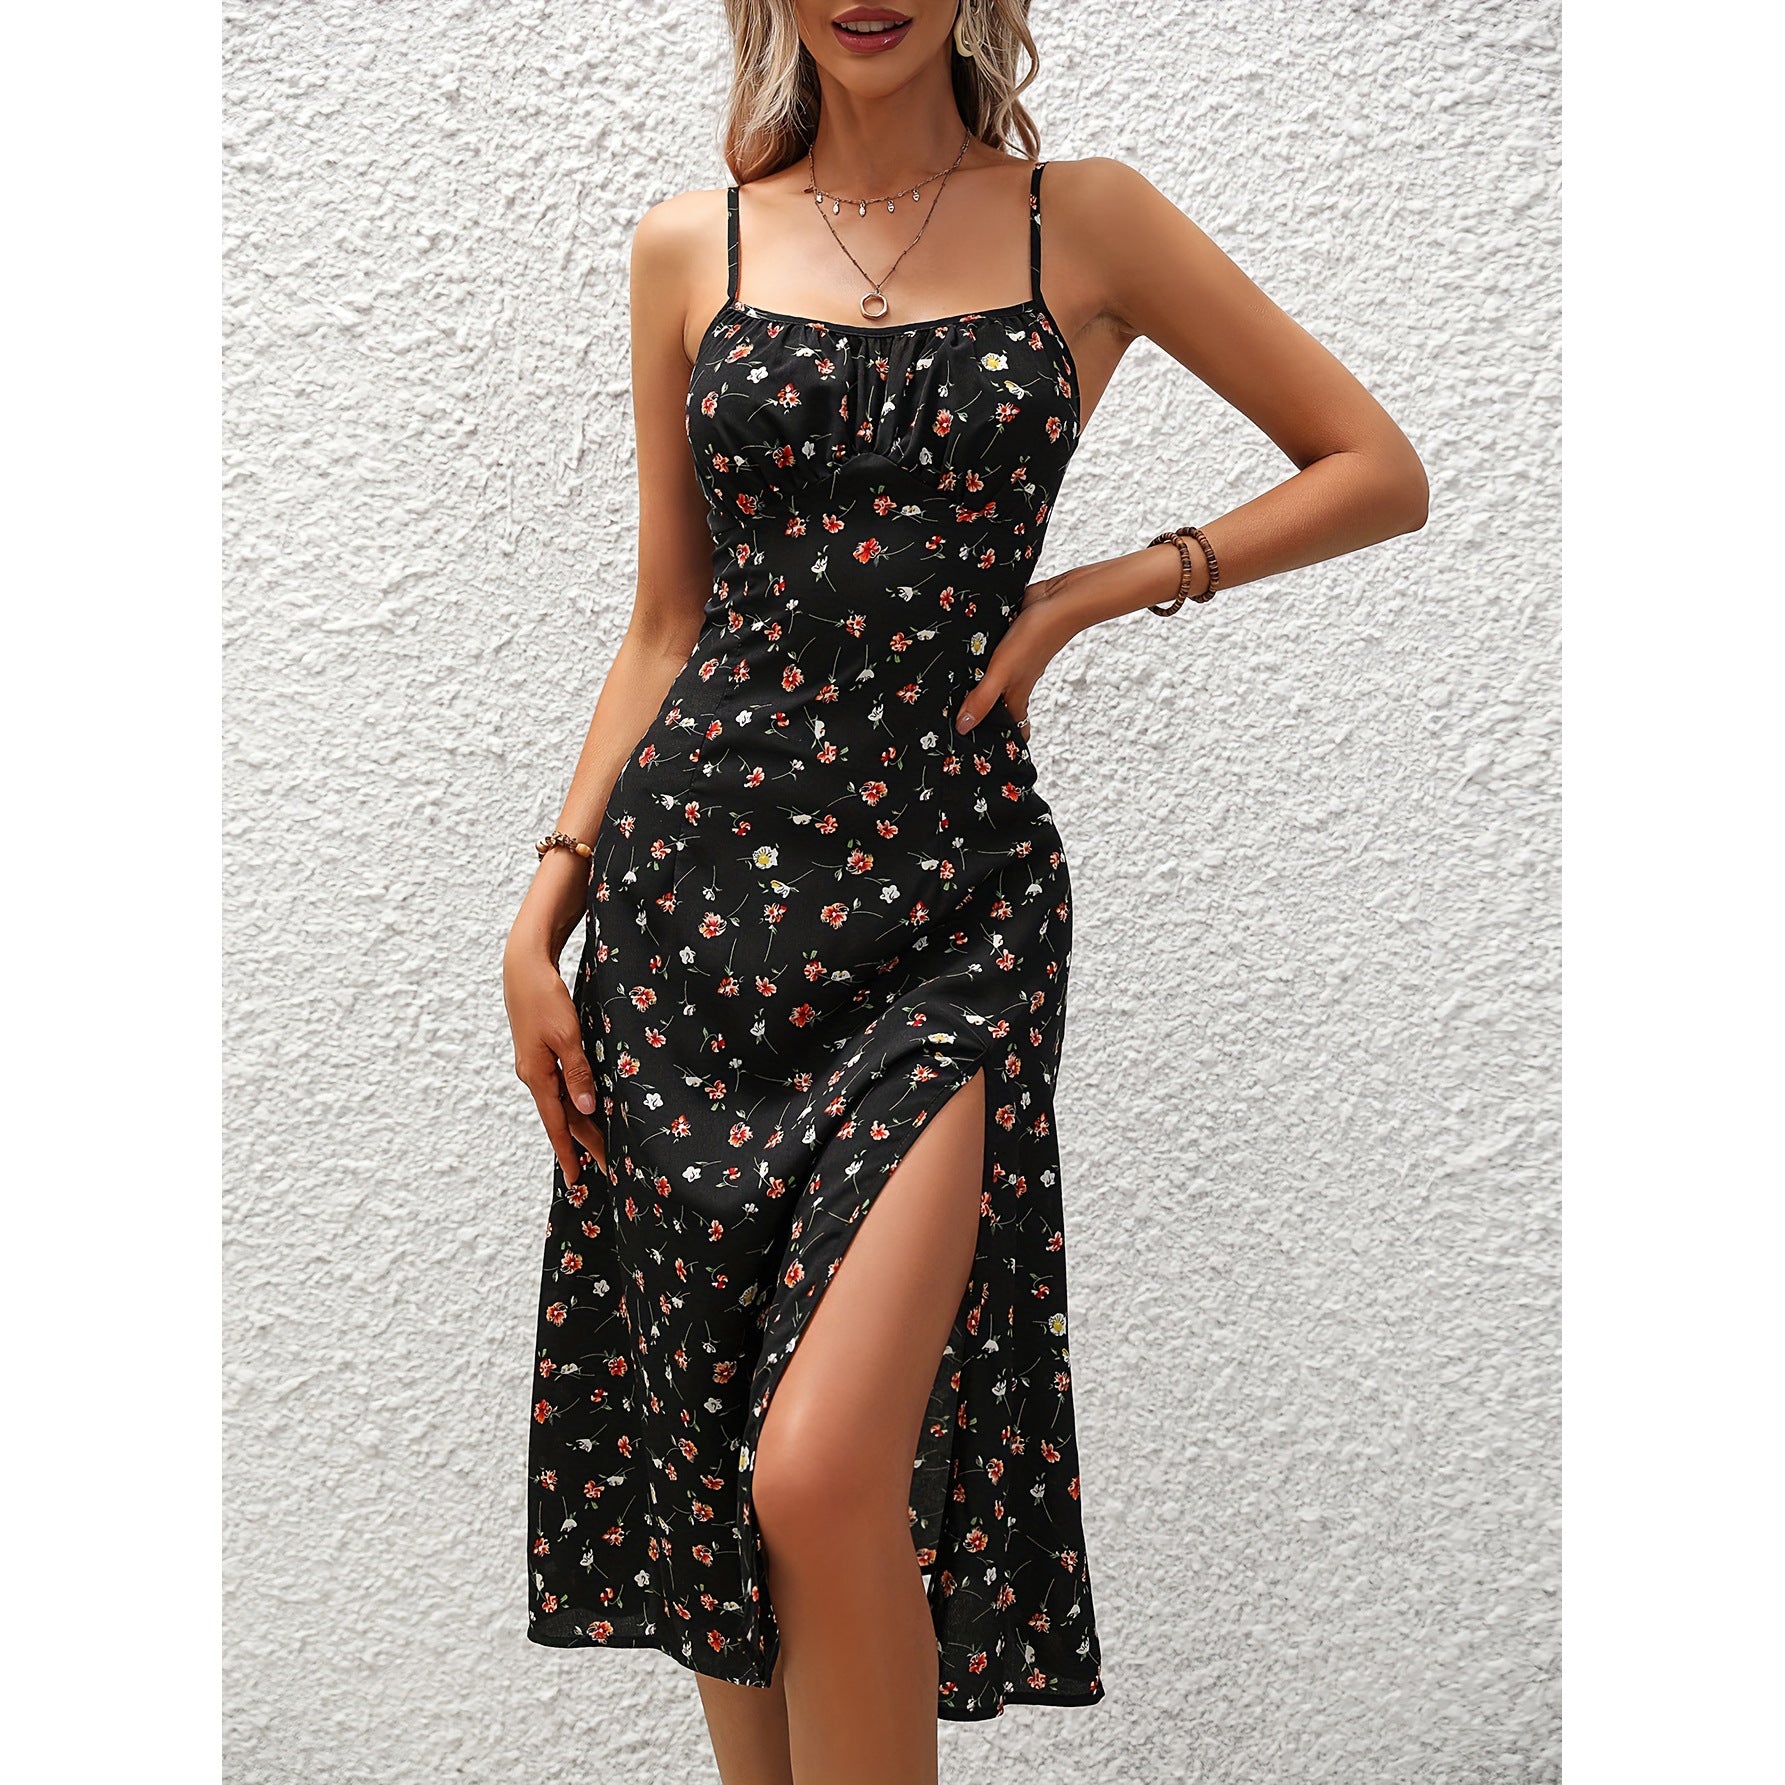 New Polka Dot Print Suspender Summer Dress